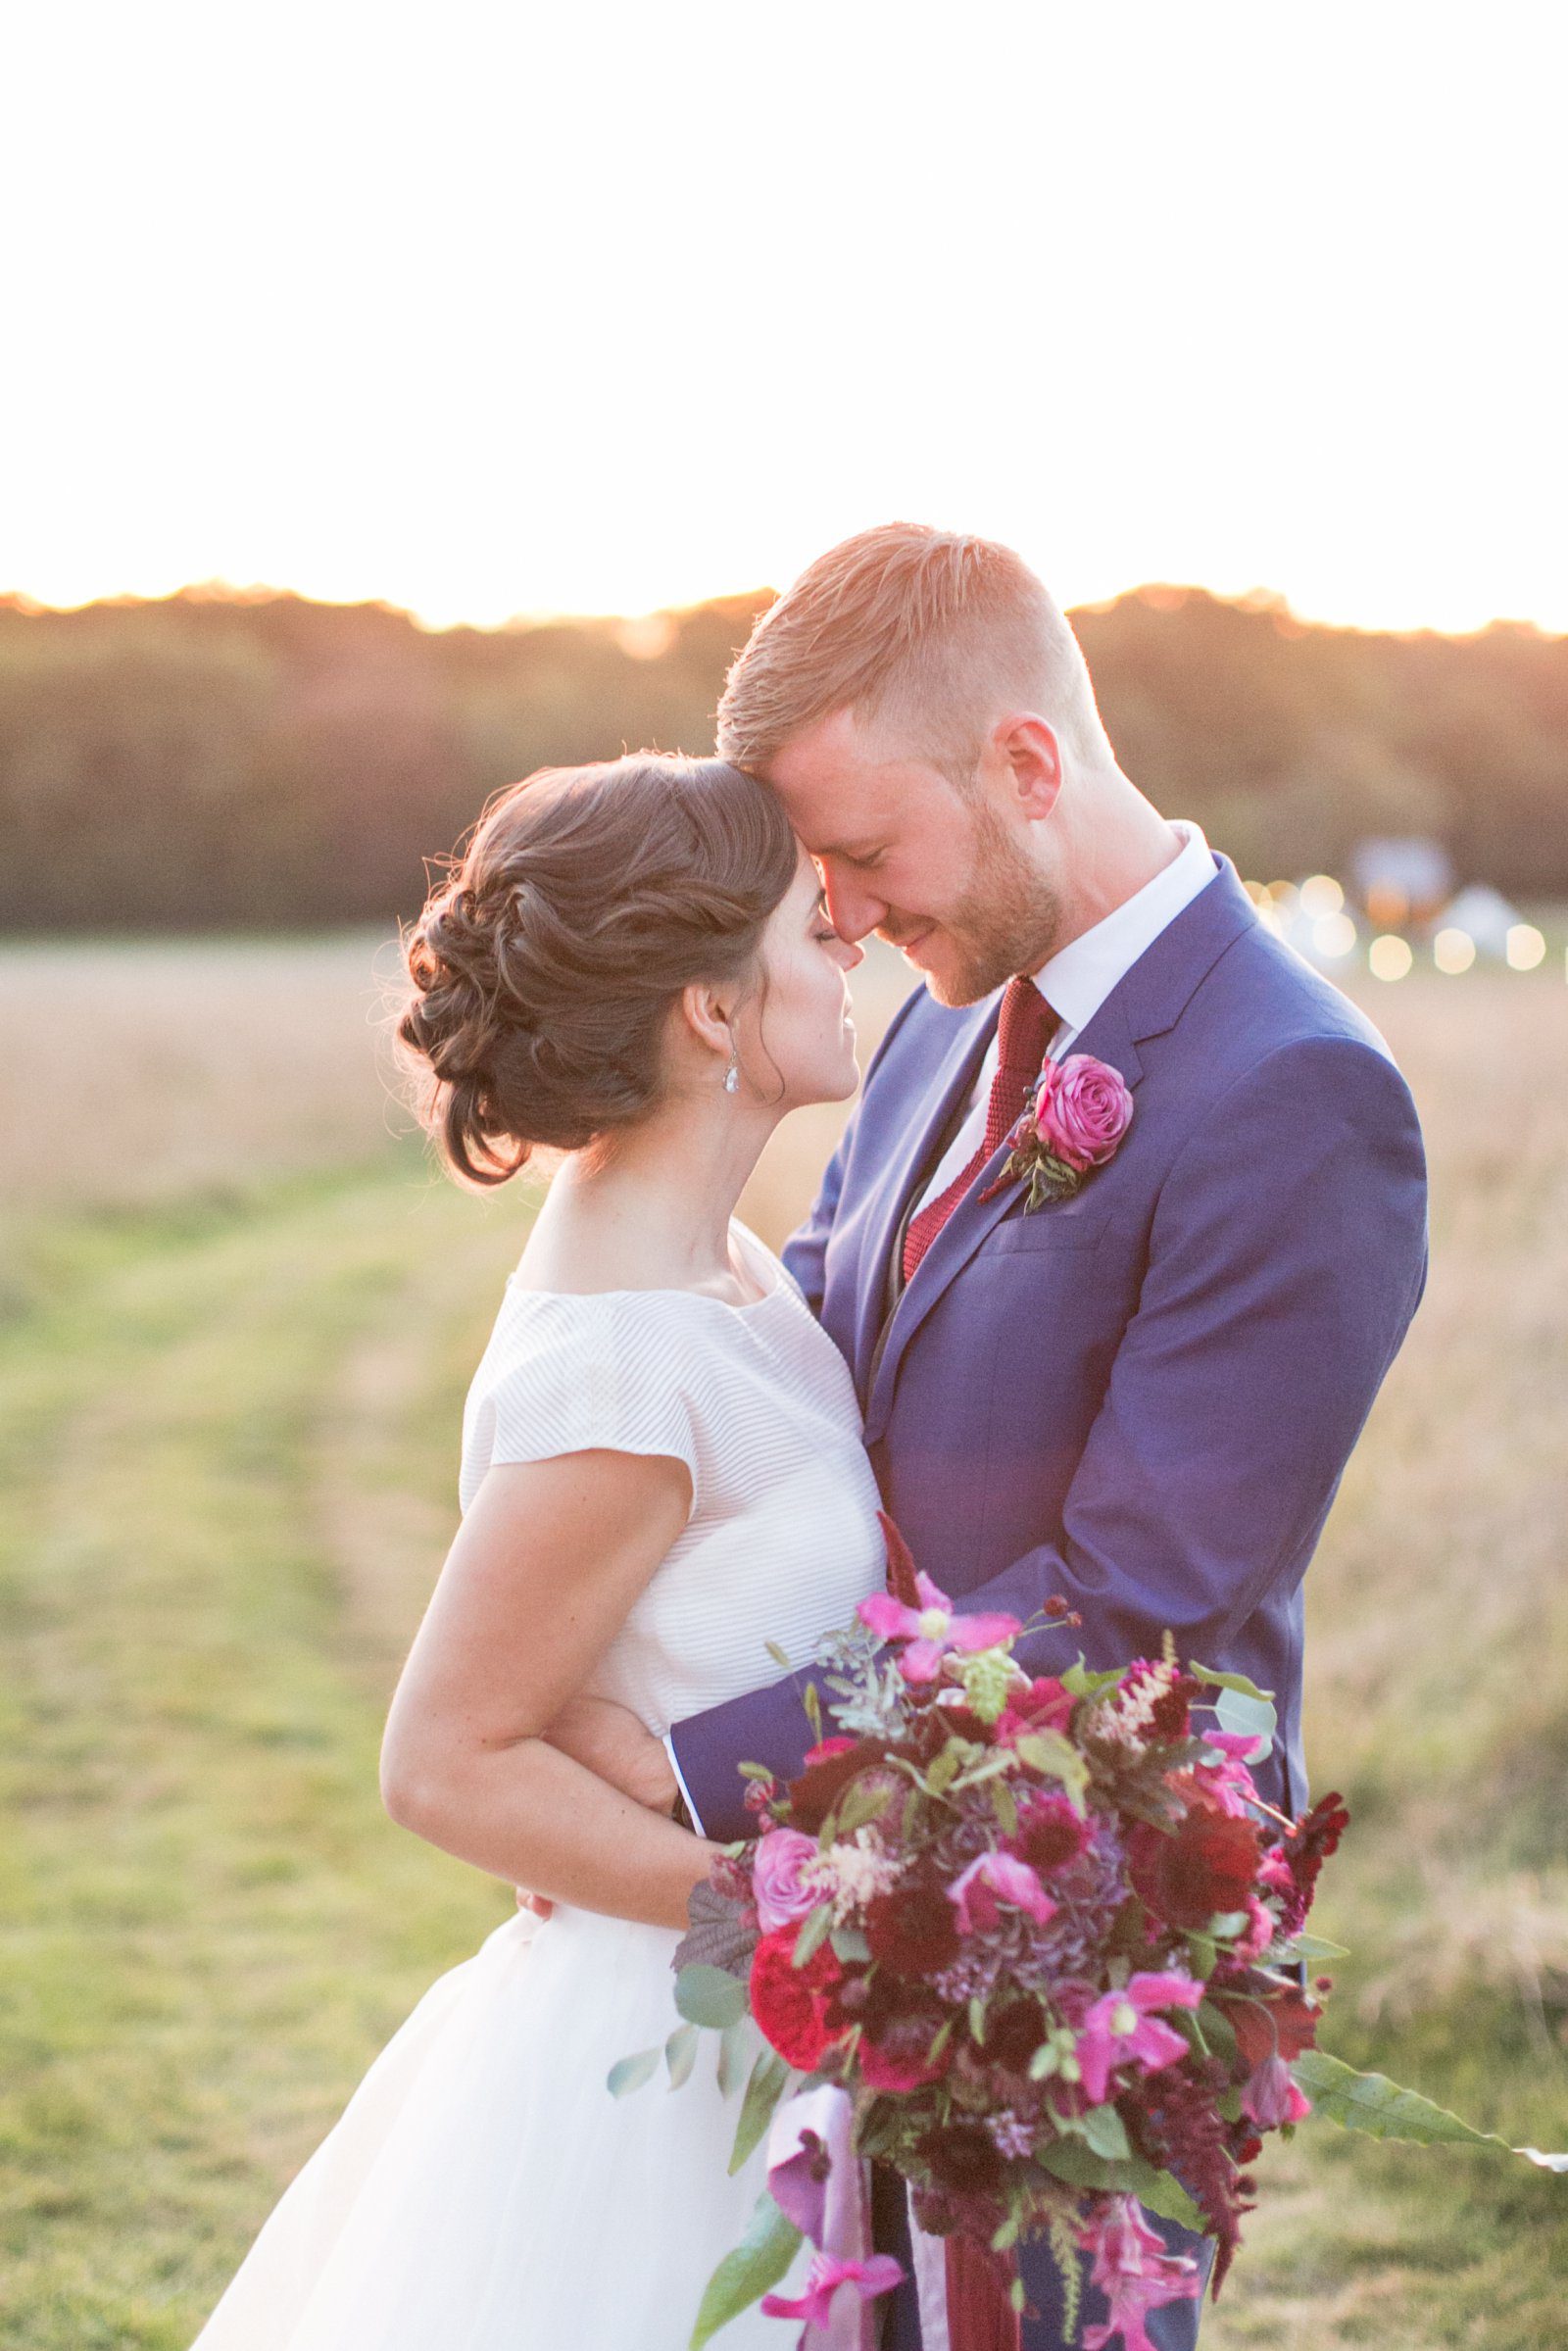 Sunset photos of the wedding couple by Anneli Marinovich at High Billinghurst Farm